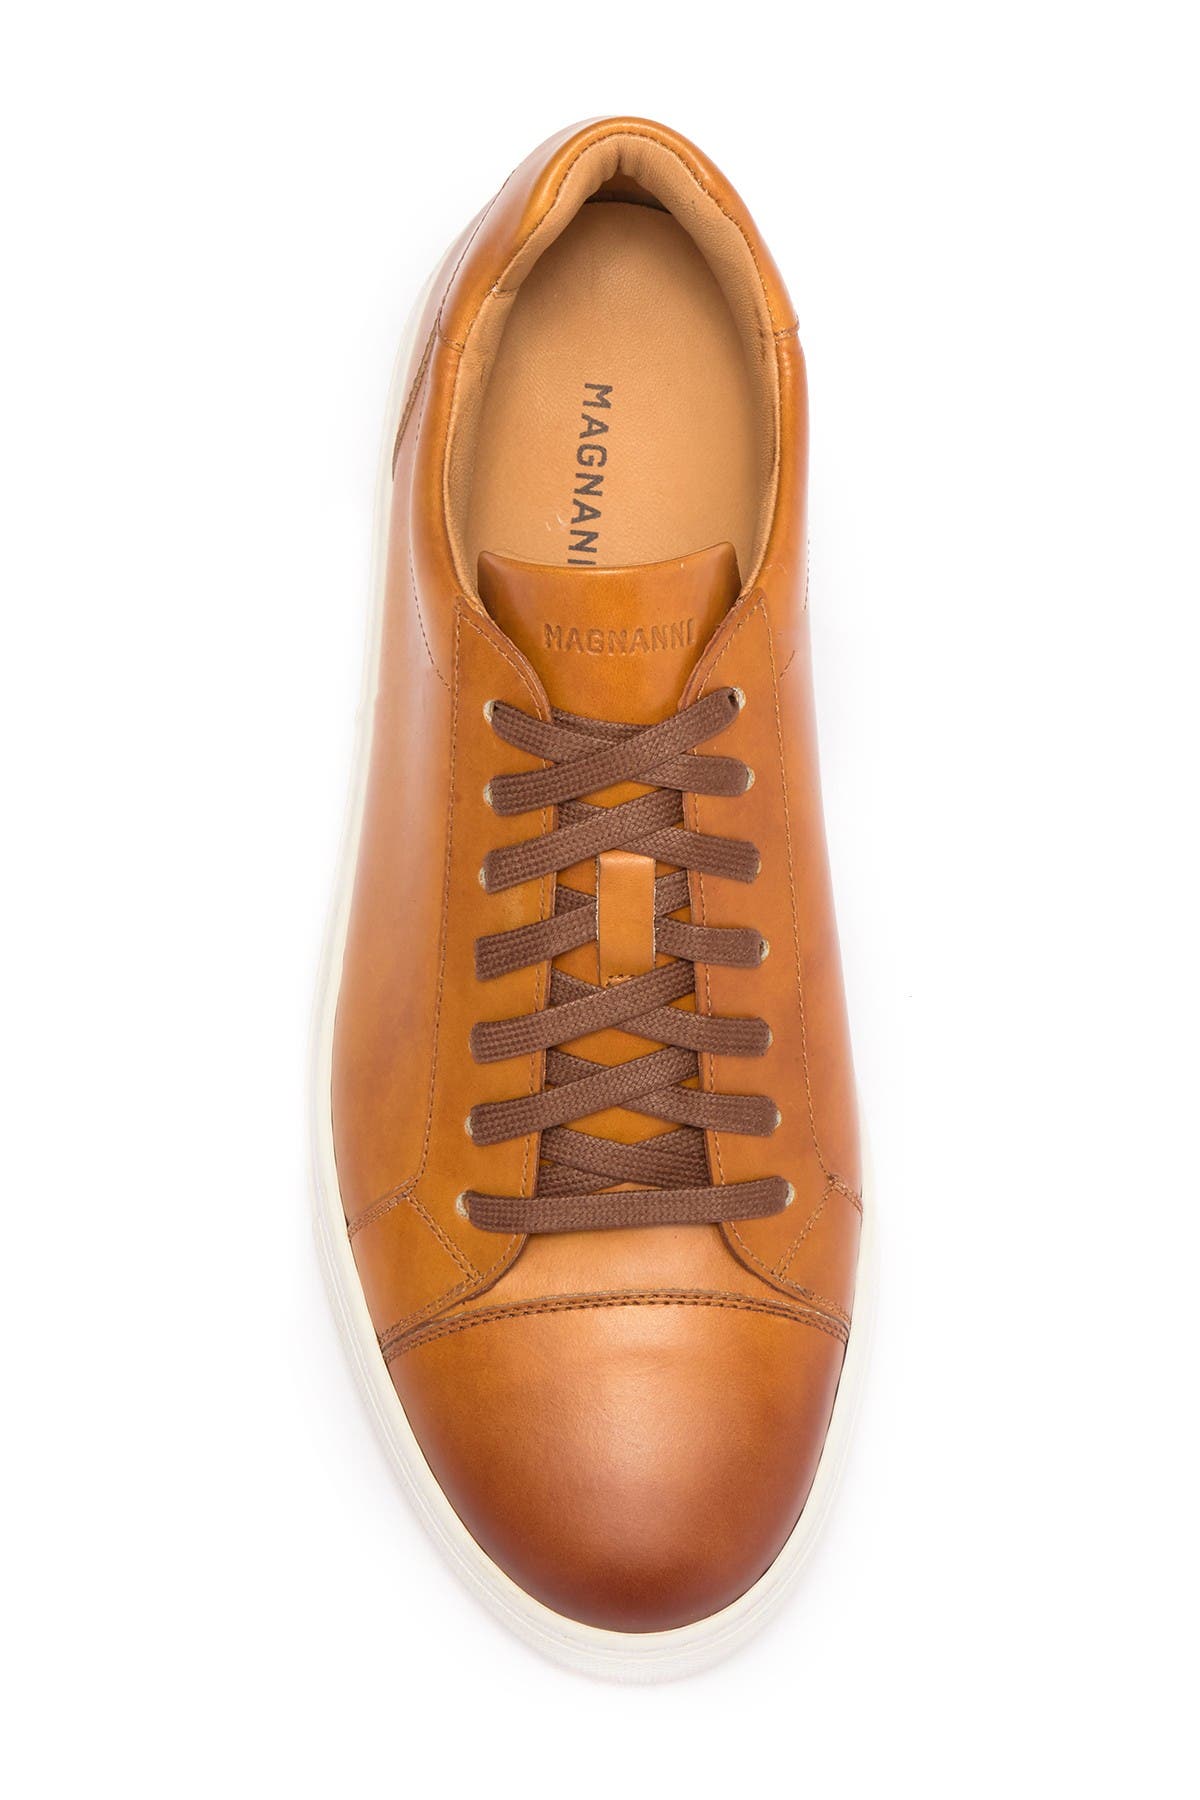 Magnanni | Cuervo Leather Sneaker 